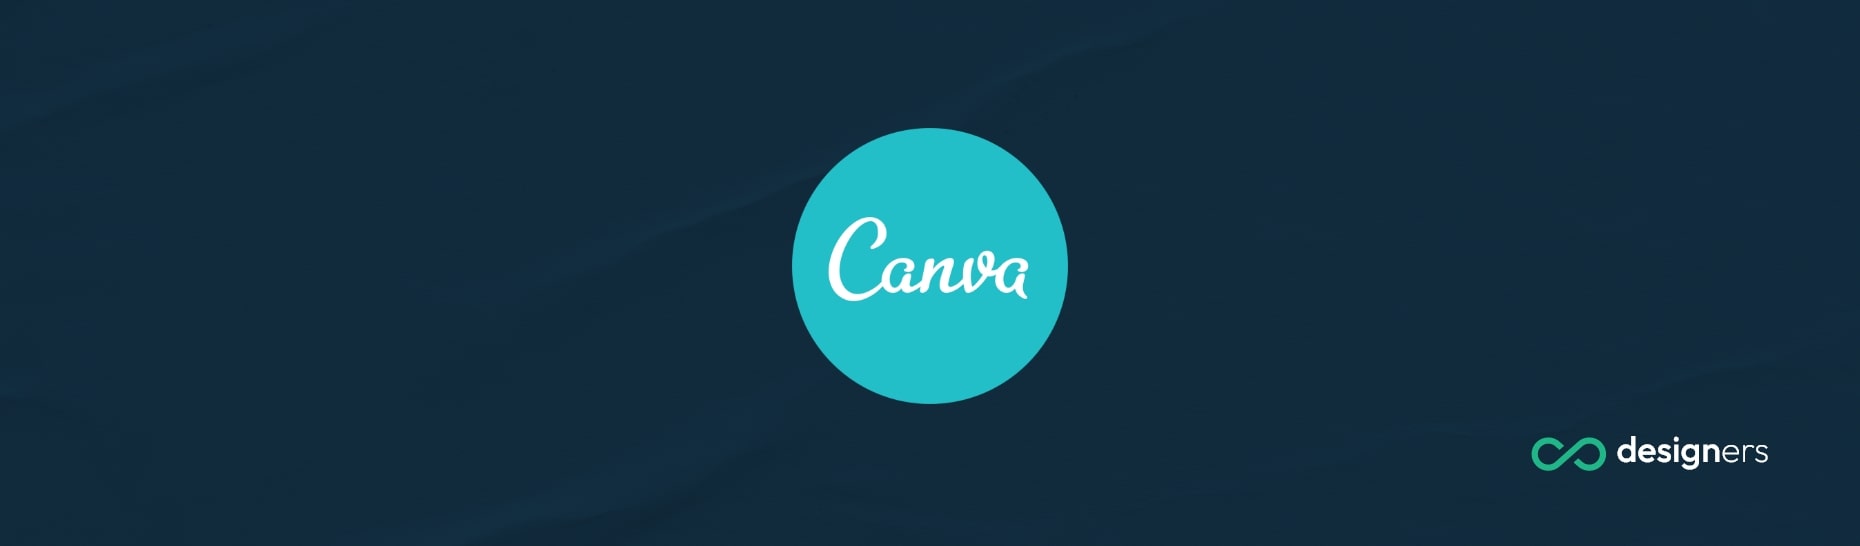 How Do I Embed HTML Into Canva? | Web Design Tutorials and Guides